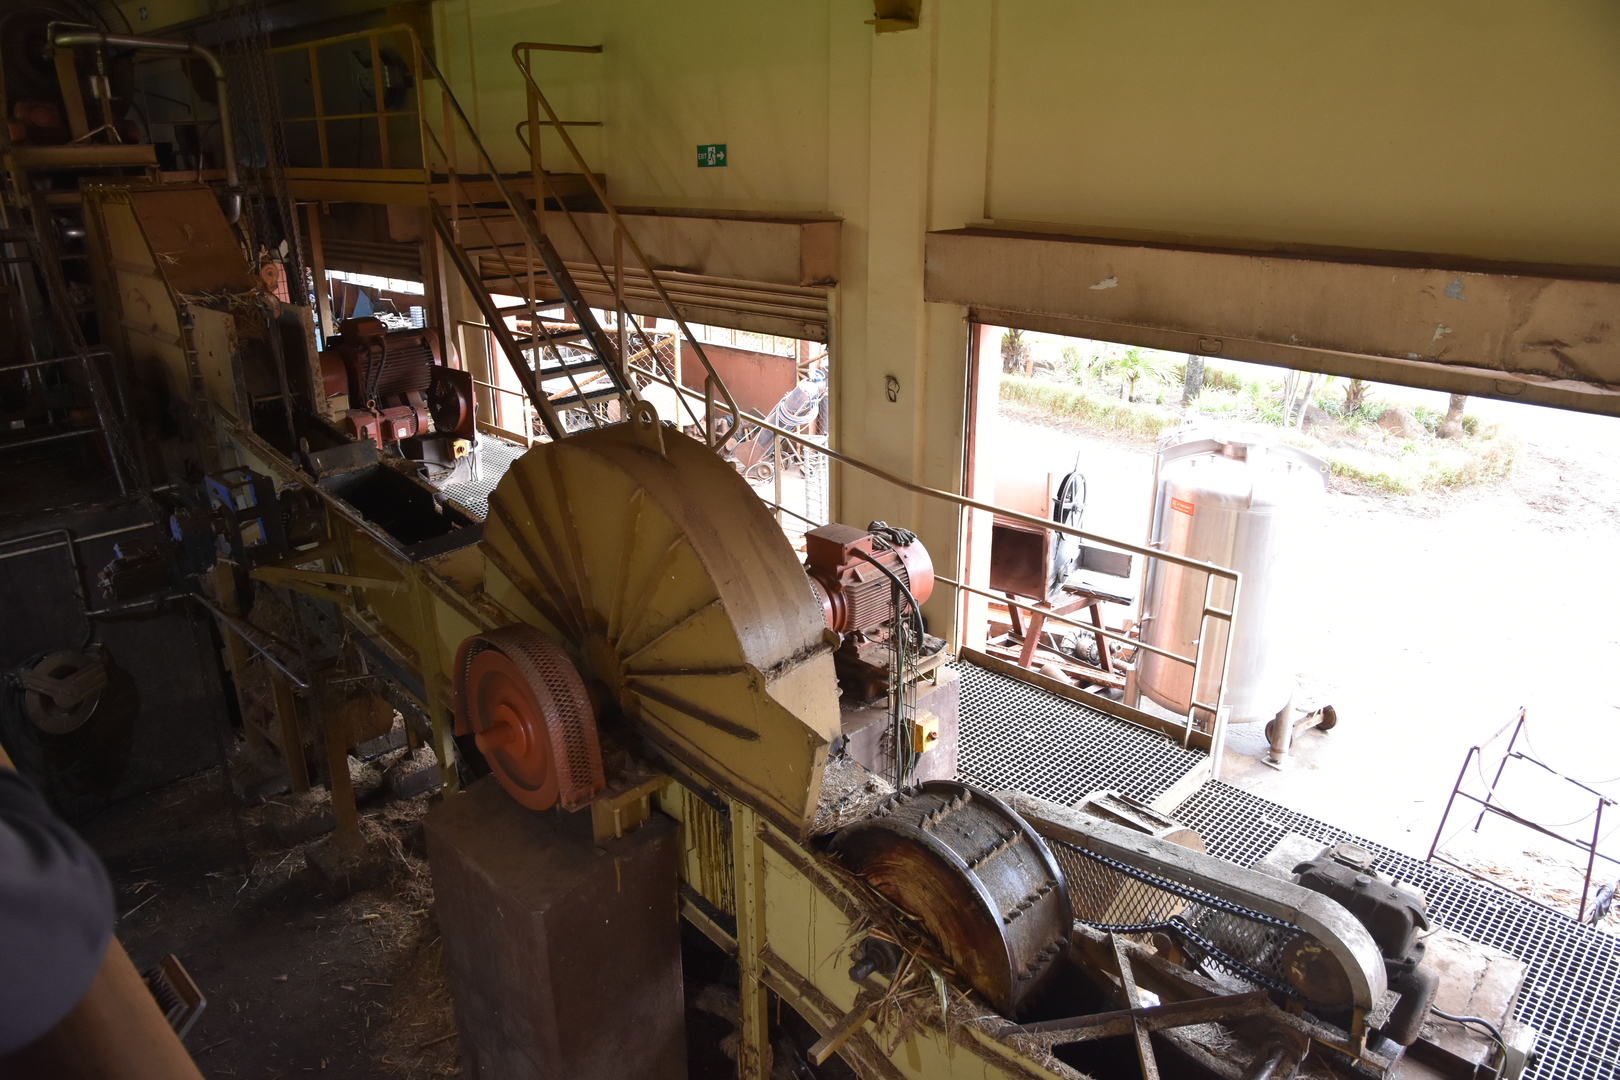 Rhumerie de Chamarel :: cane processing machinery